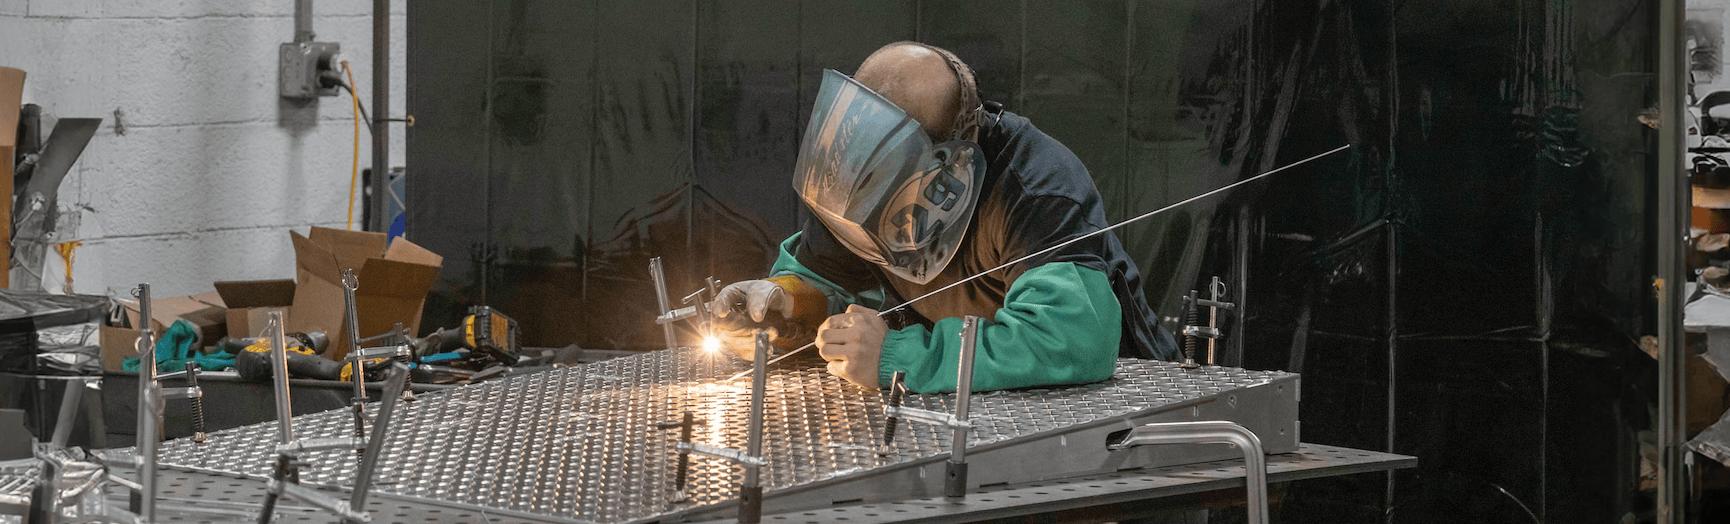 man in welding mask welding materials as part of metal fabrication